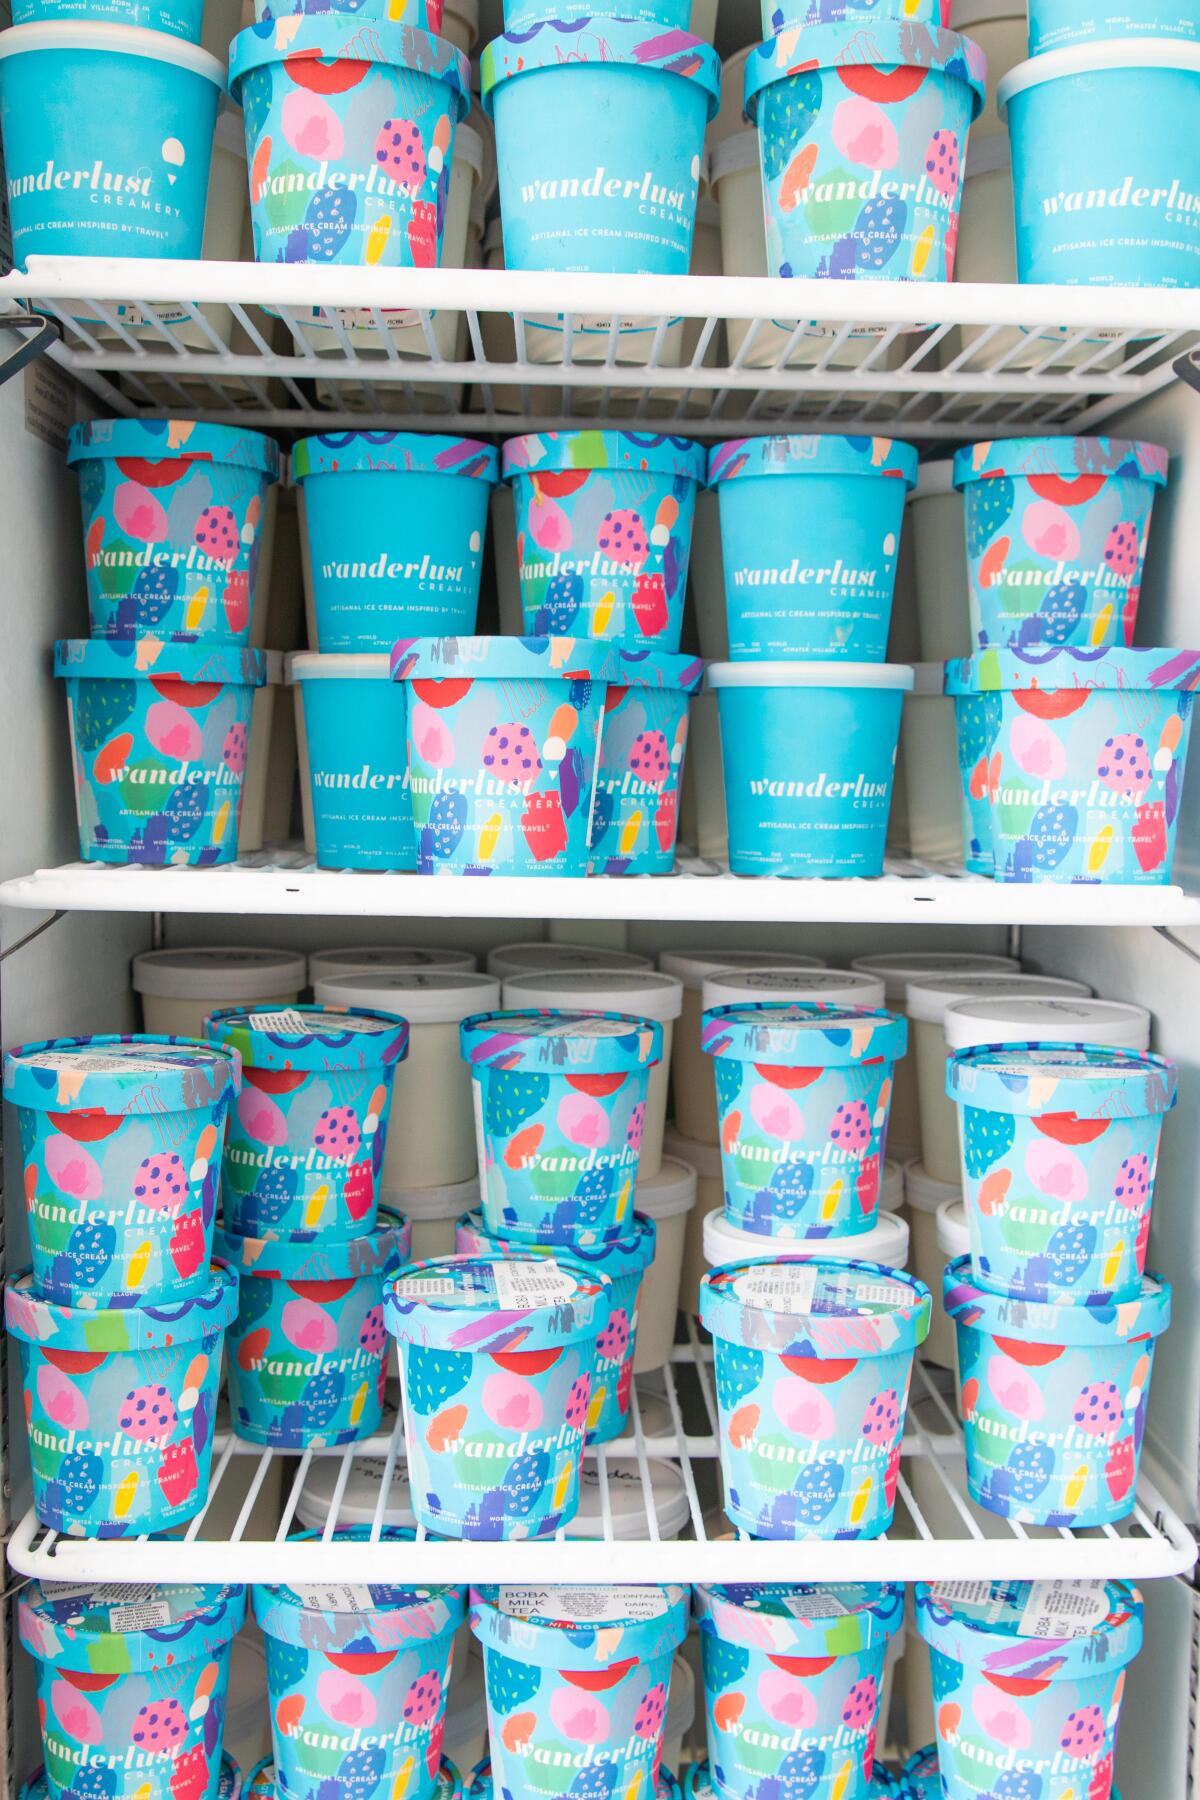 Wanderlust Creamery products inside a refrigerator. 